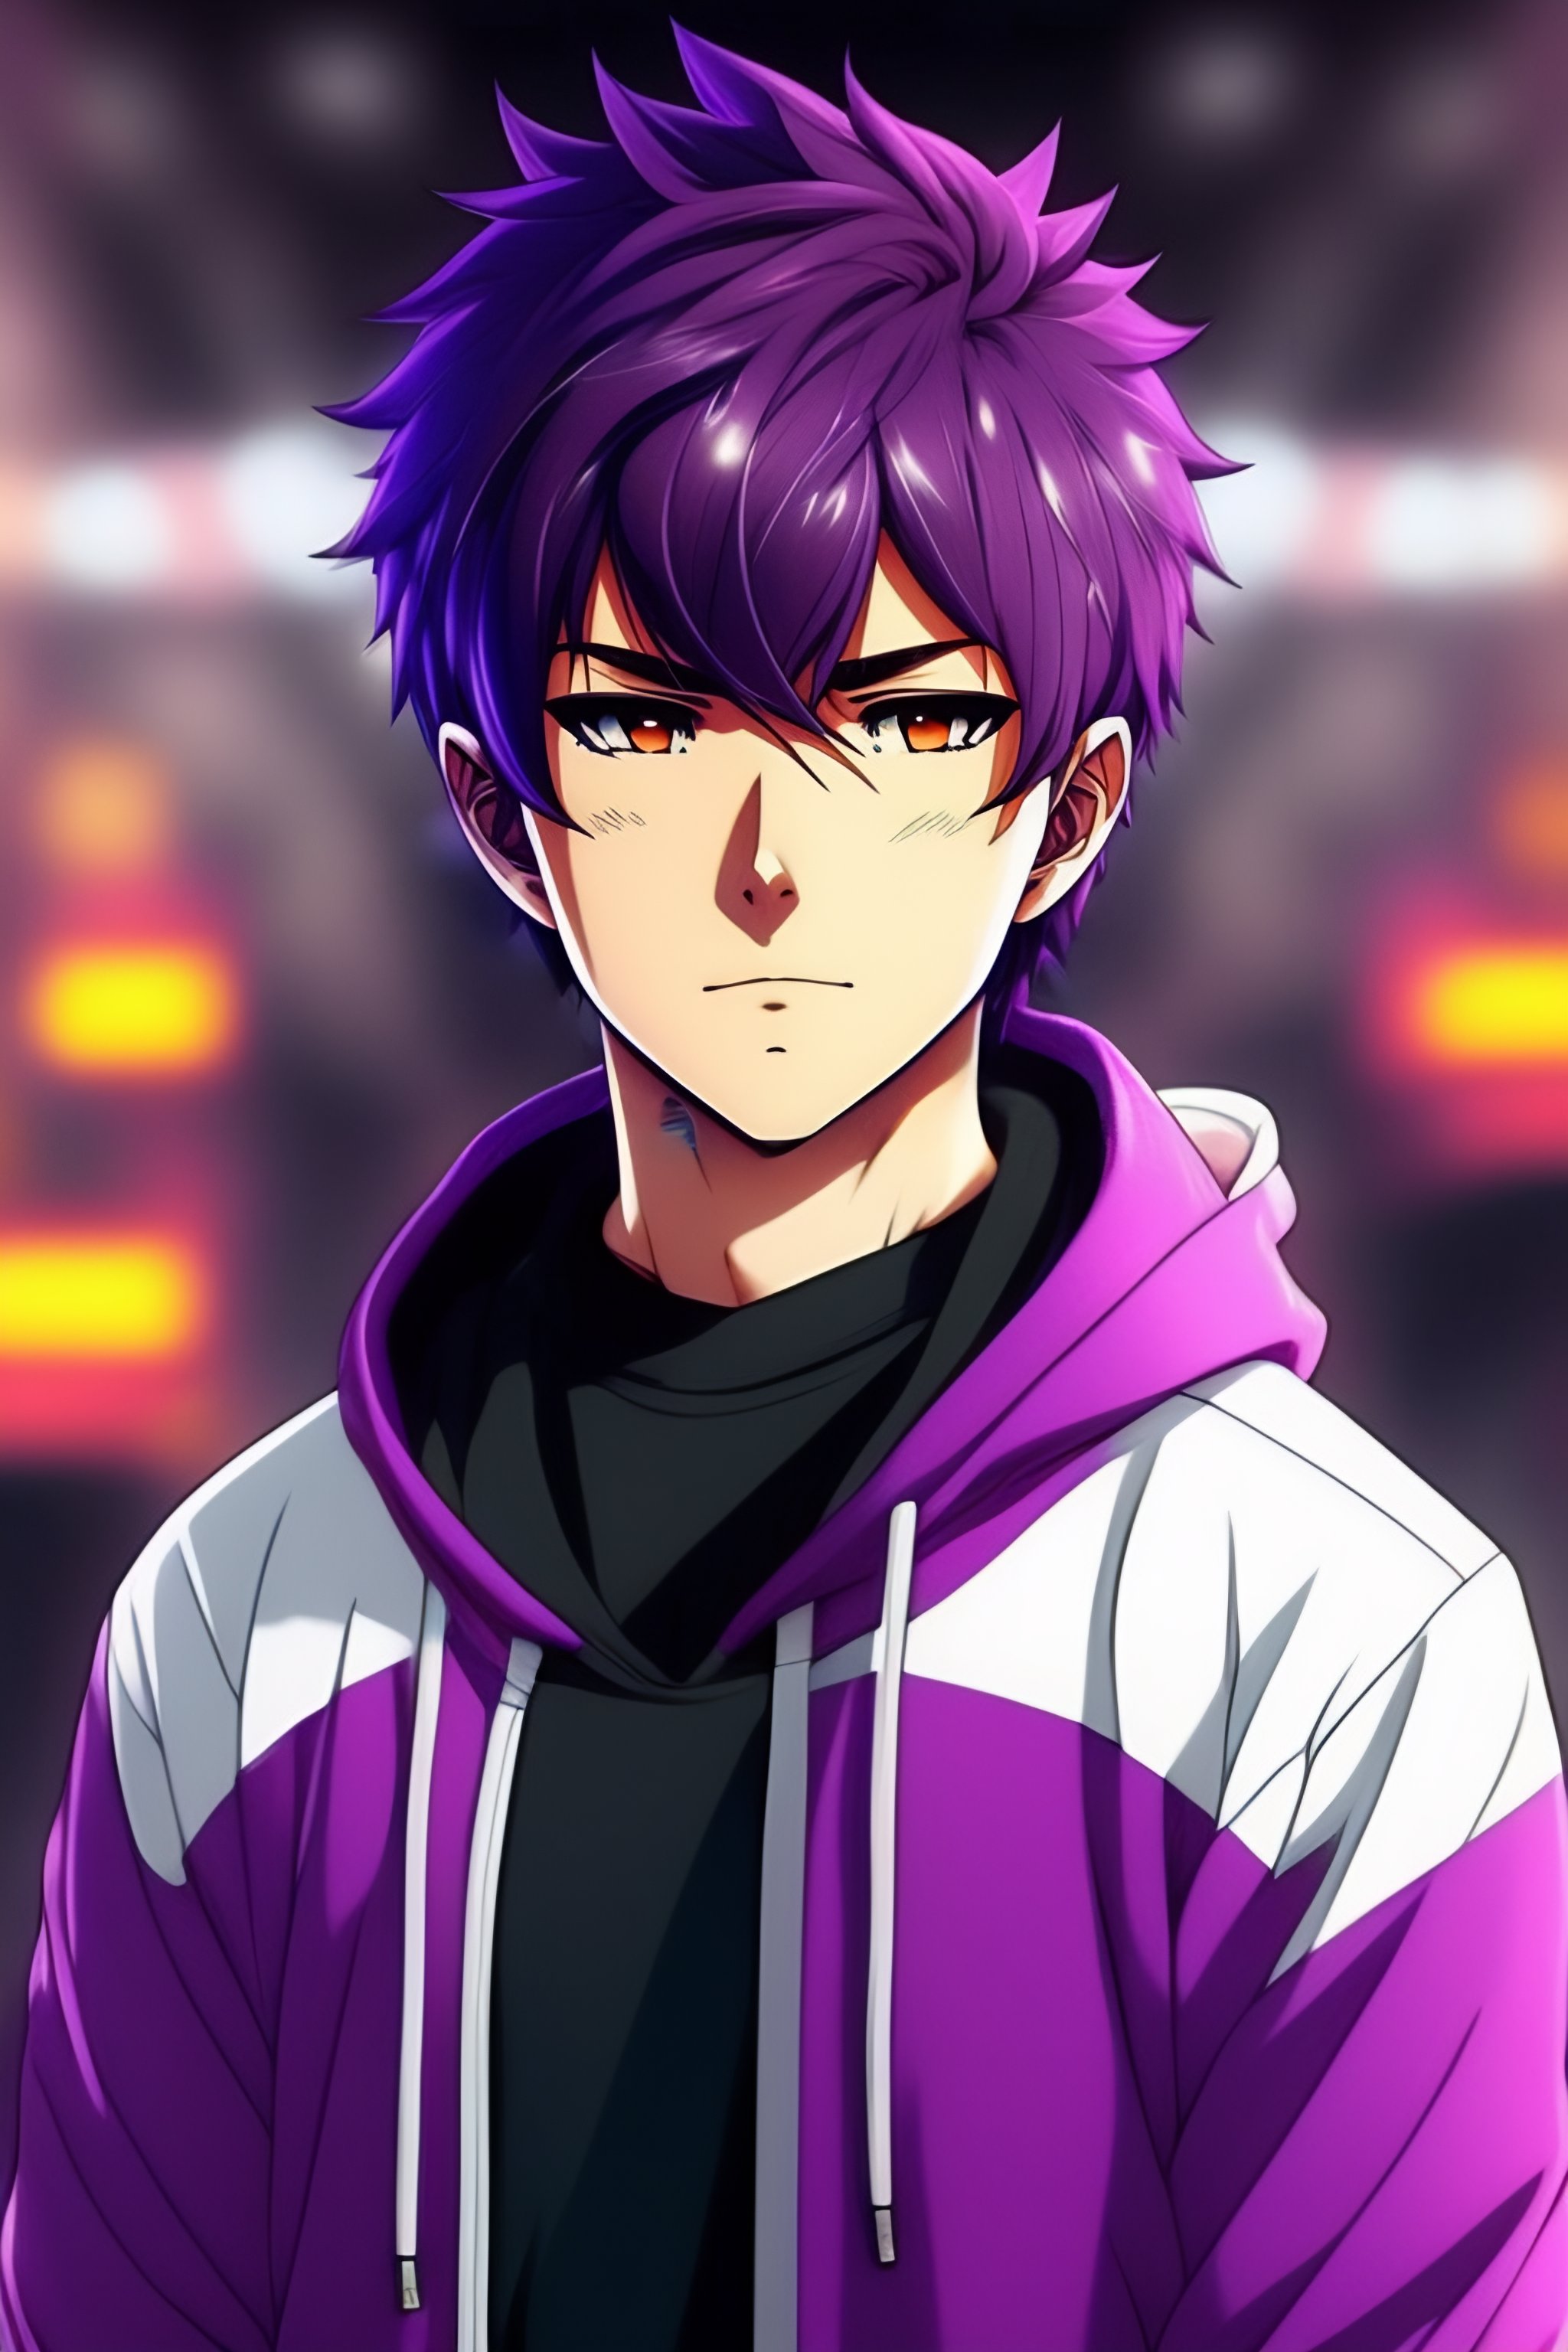 Lexica - Purple hair anime brown guy, hoodie, no expression, no emotion,  anime style, manga, cartoon, anime